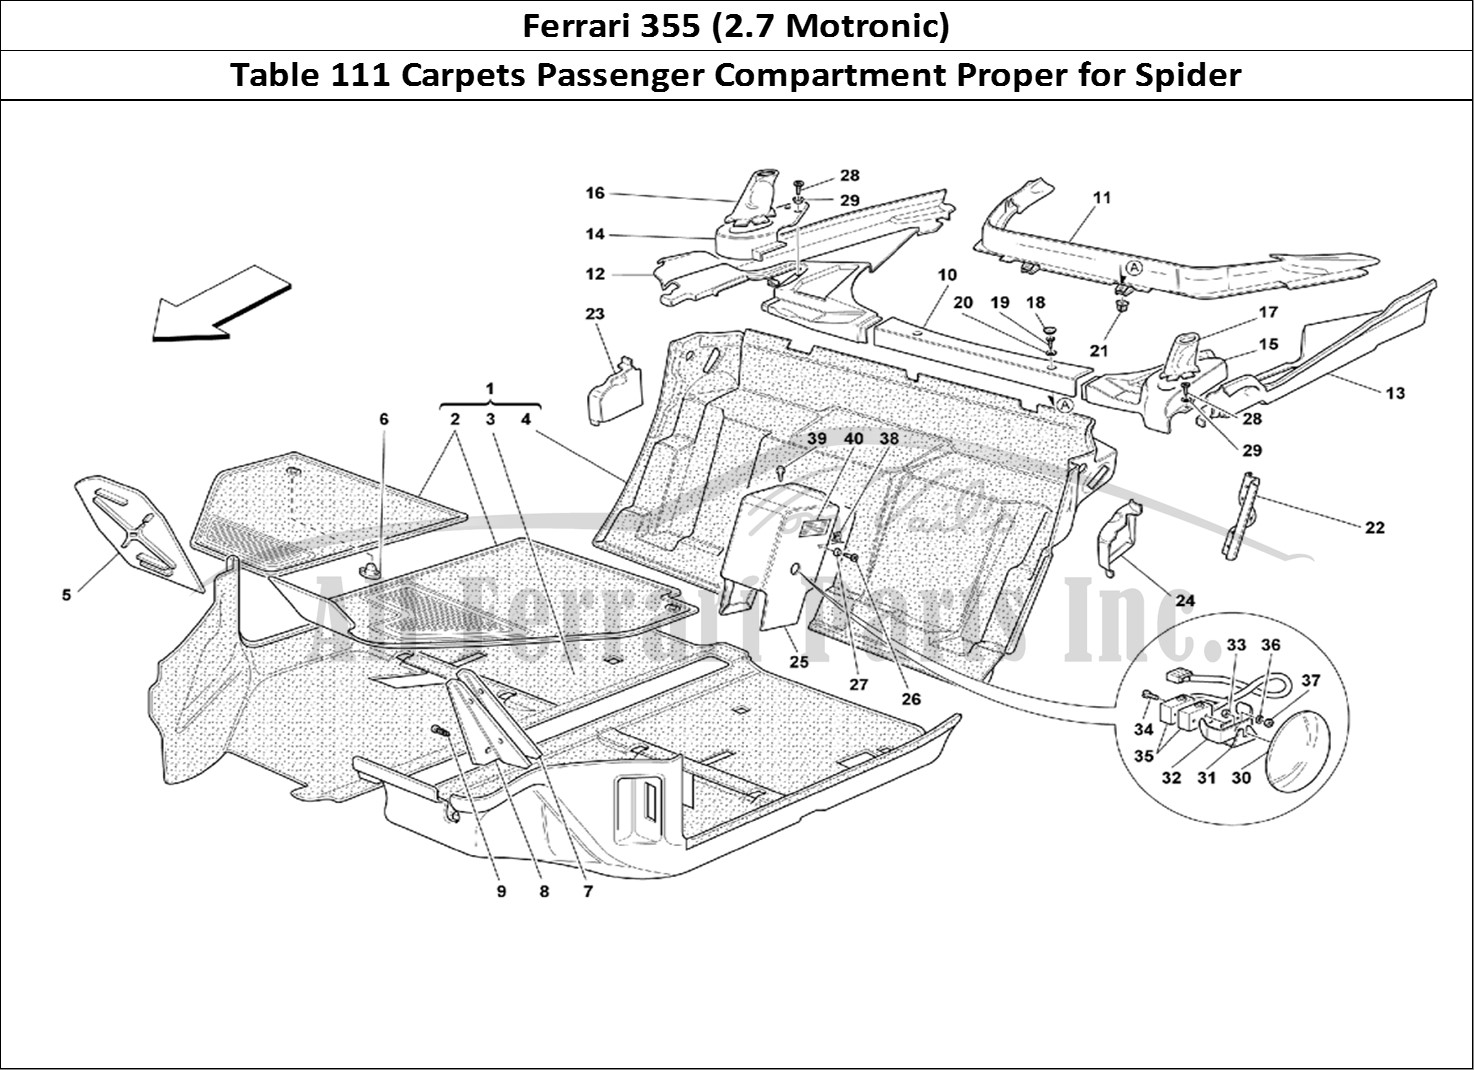 Ferrari Parts Ferrari 355 (2.7 Motronic) Page 111 Passengers Compartment Ca